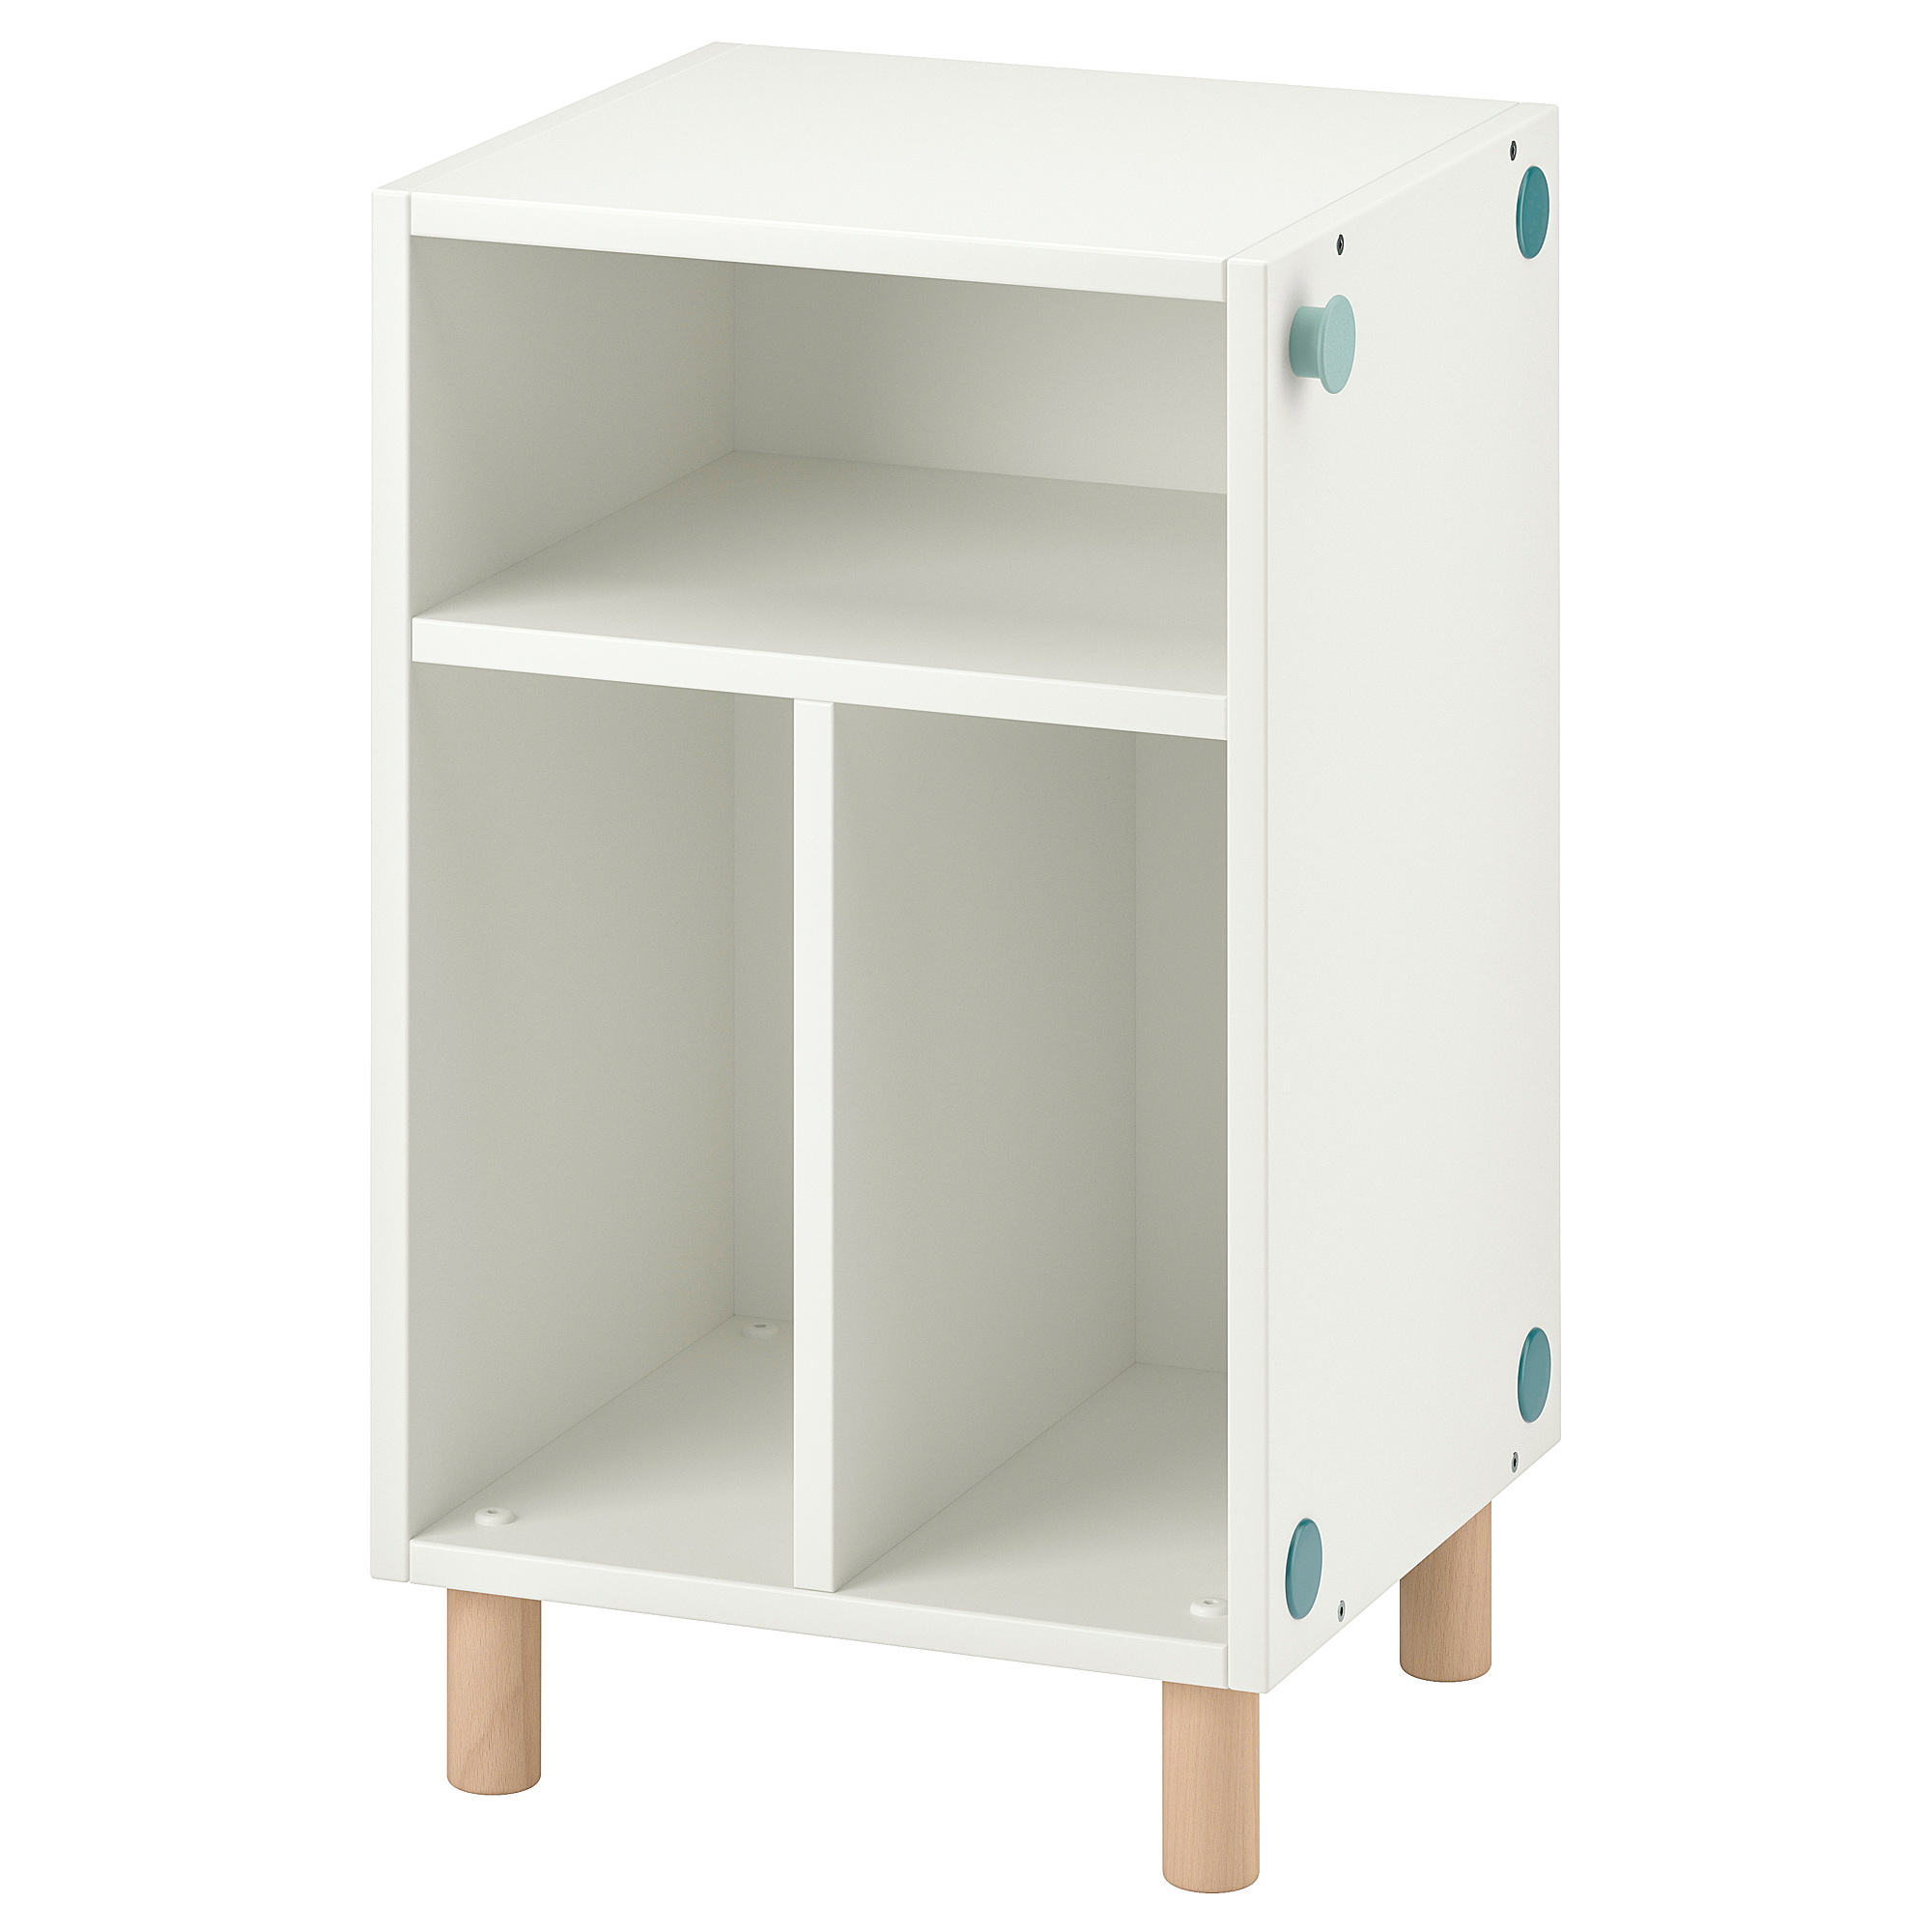 SMUSSLA bedside table/shelf unit